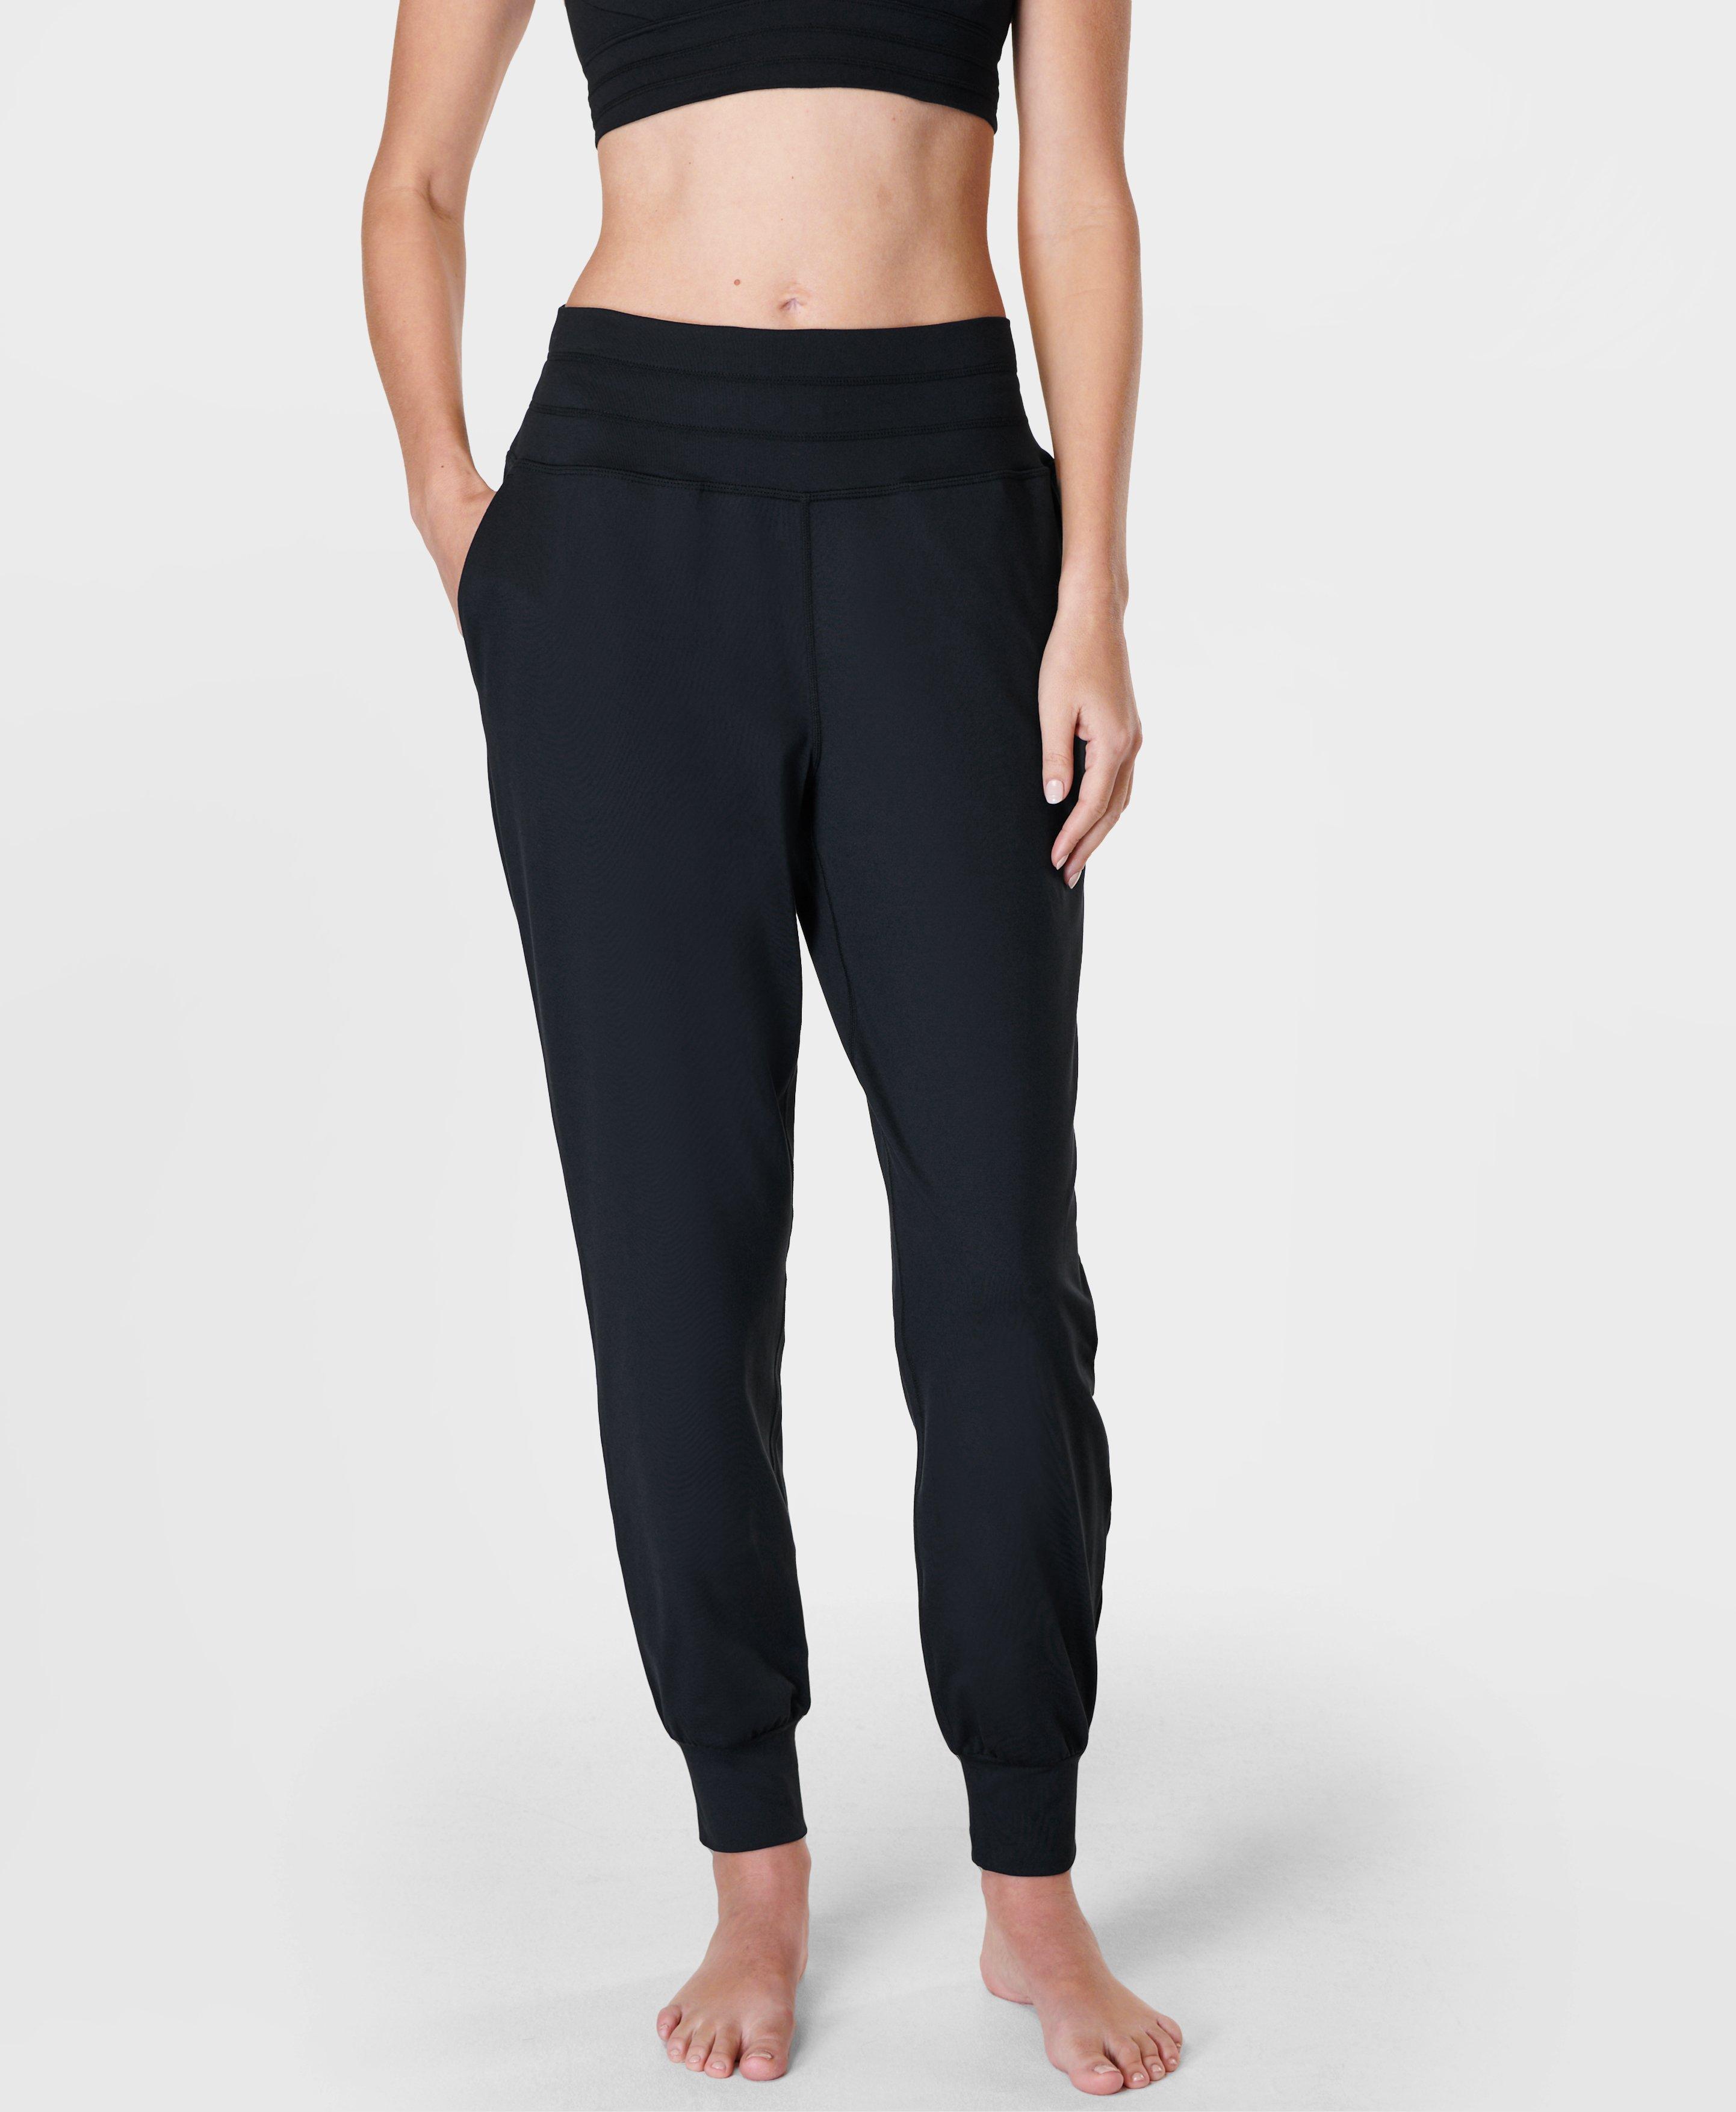 SweatyRocks Women's Casual Solid Sweatpants Yoga Workout Athletic